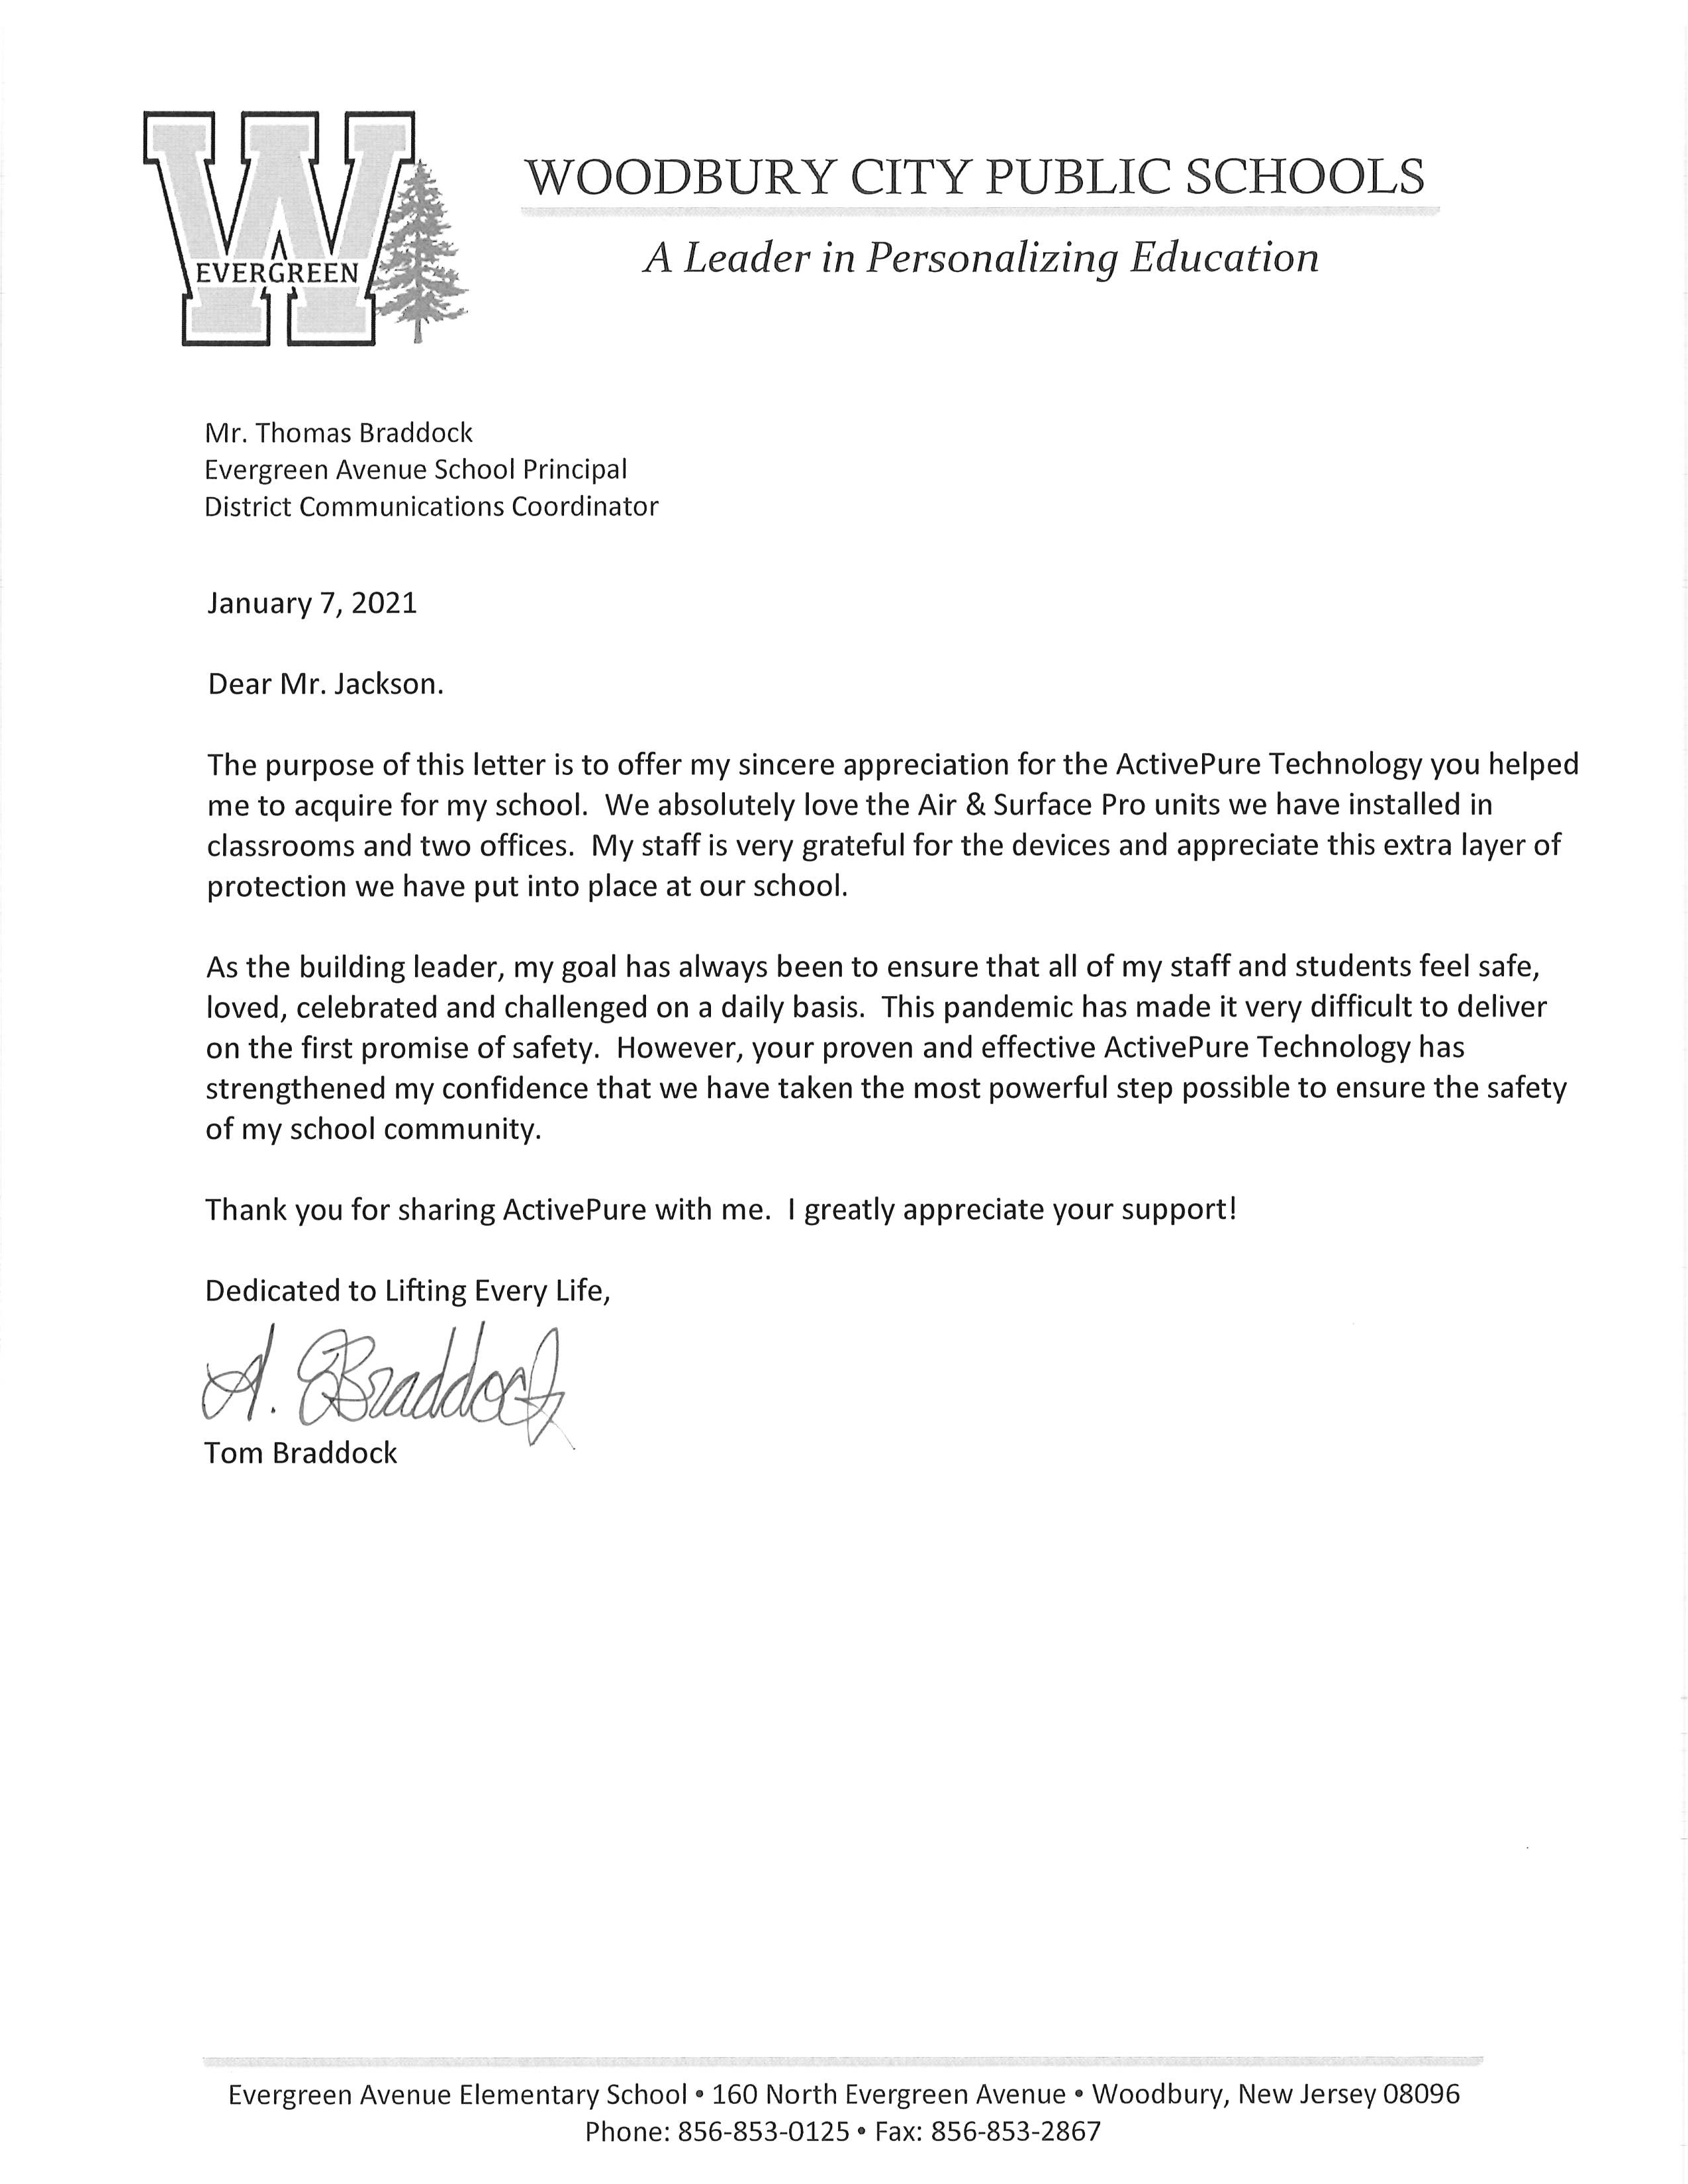 Woodbury Letter of Appreciation